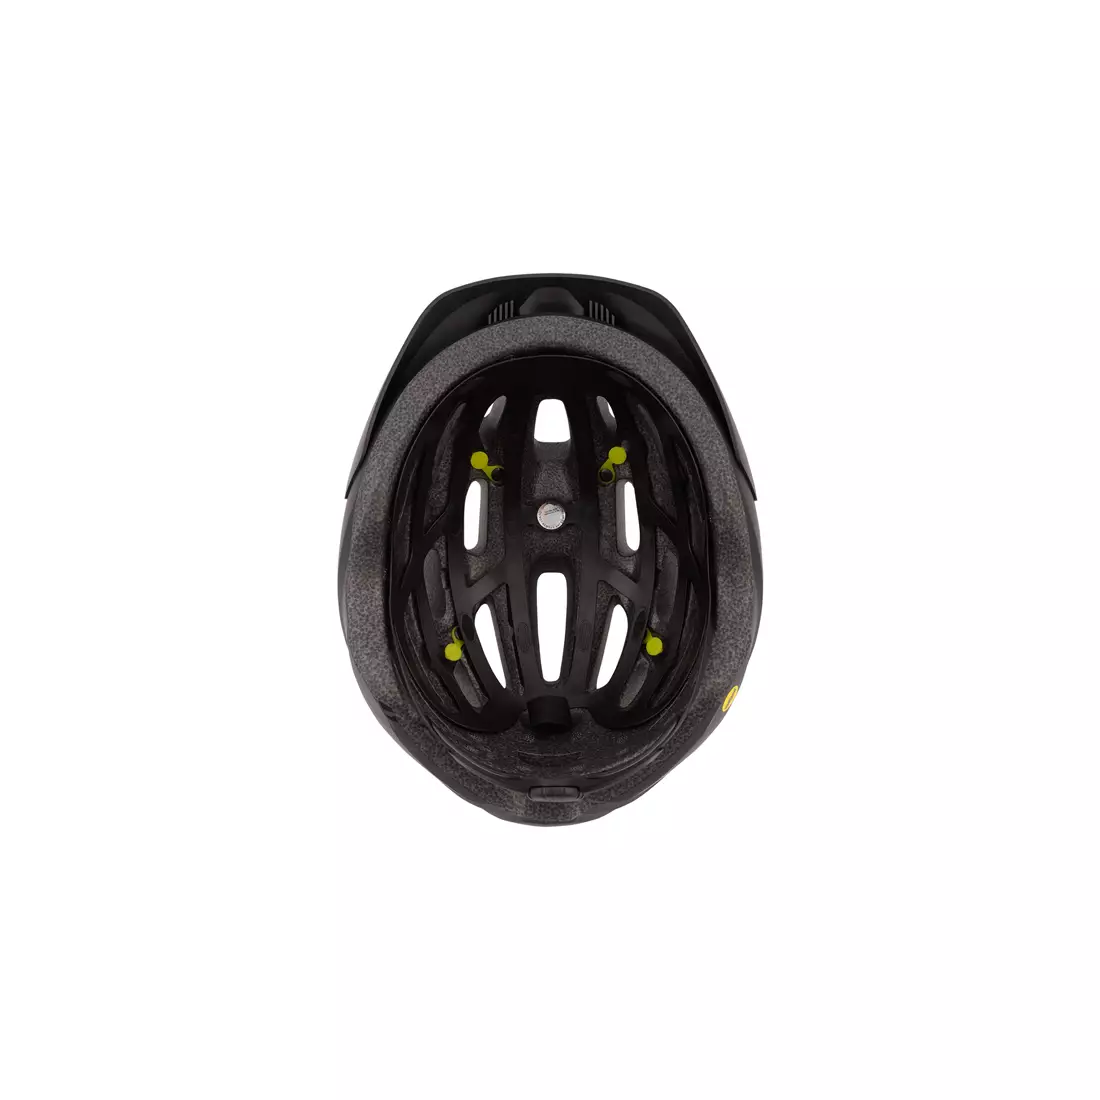 GIRO Cyklistická helma mtb REGISTER INTEGRATED MIPS matte black GR-7089186